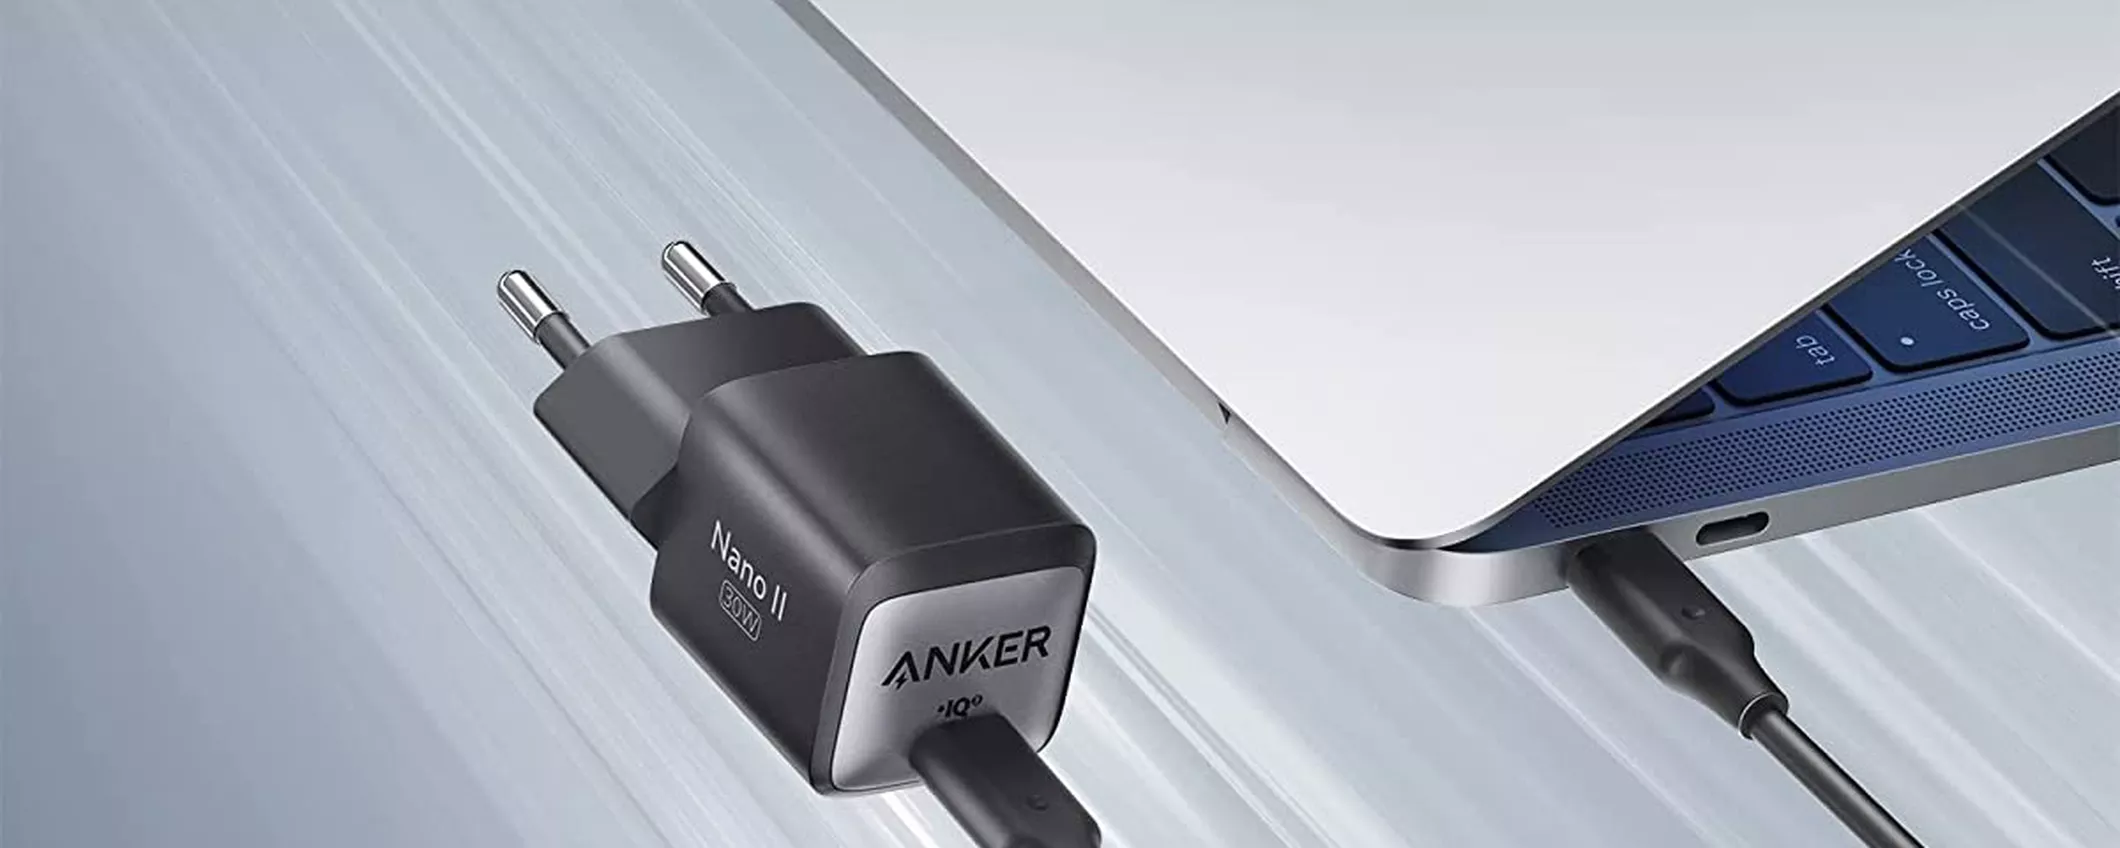 Anker, caricabatterie USB-C Nano 30W: SCONTO con Coupon